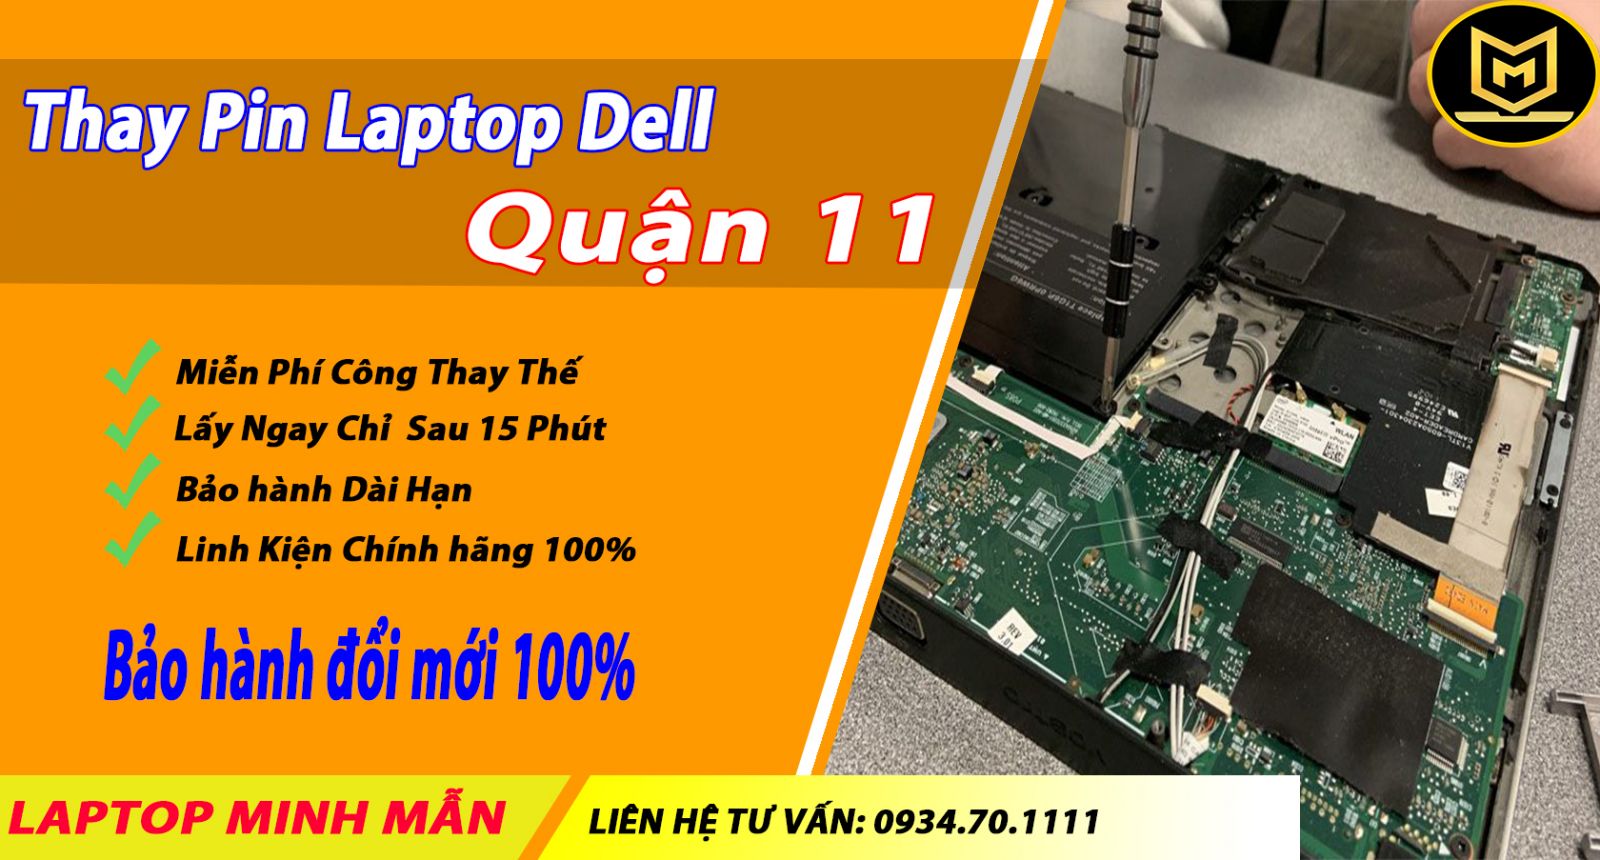 Thay-pin-laptop-Dell-quận-11